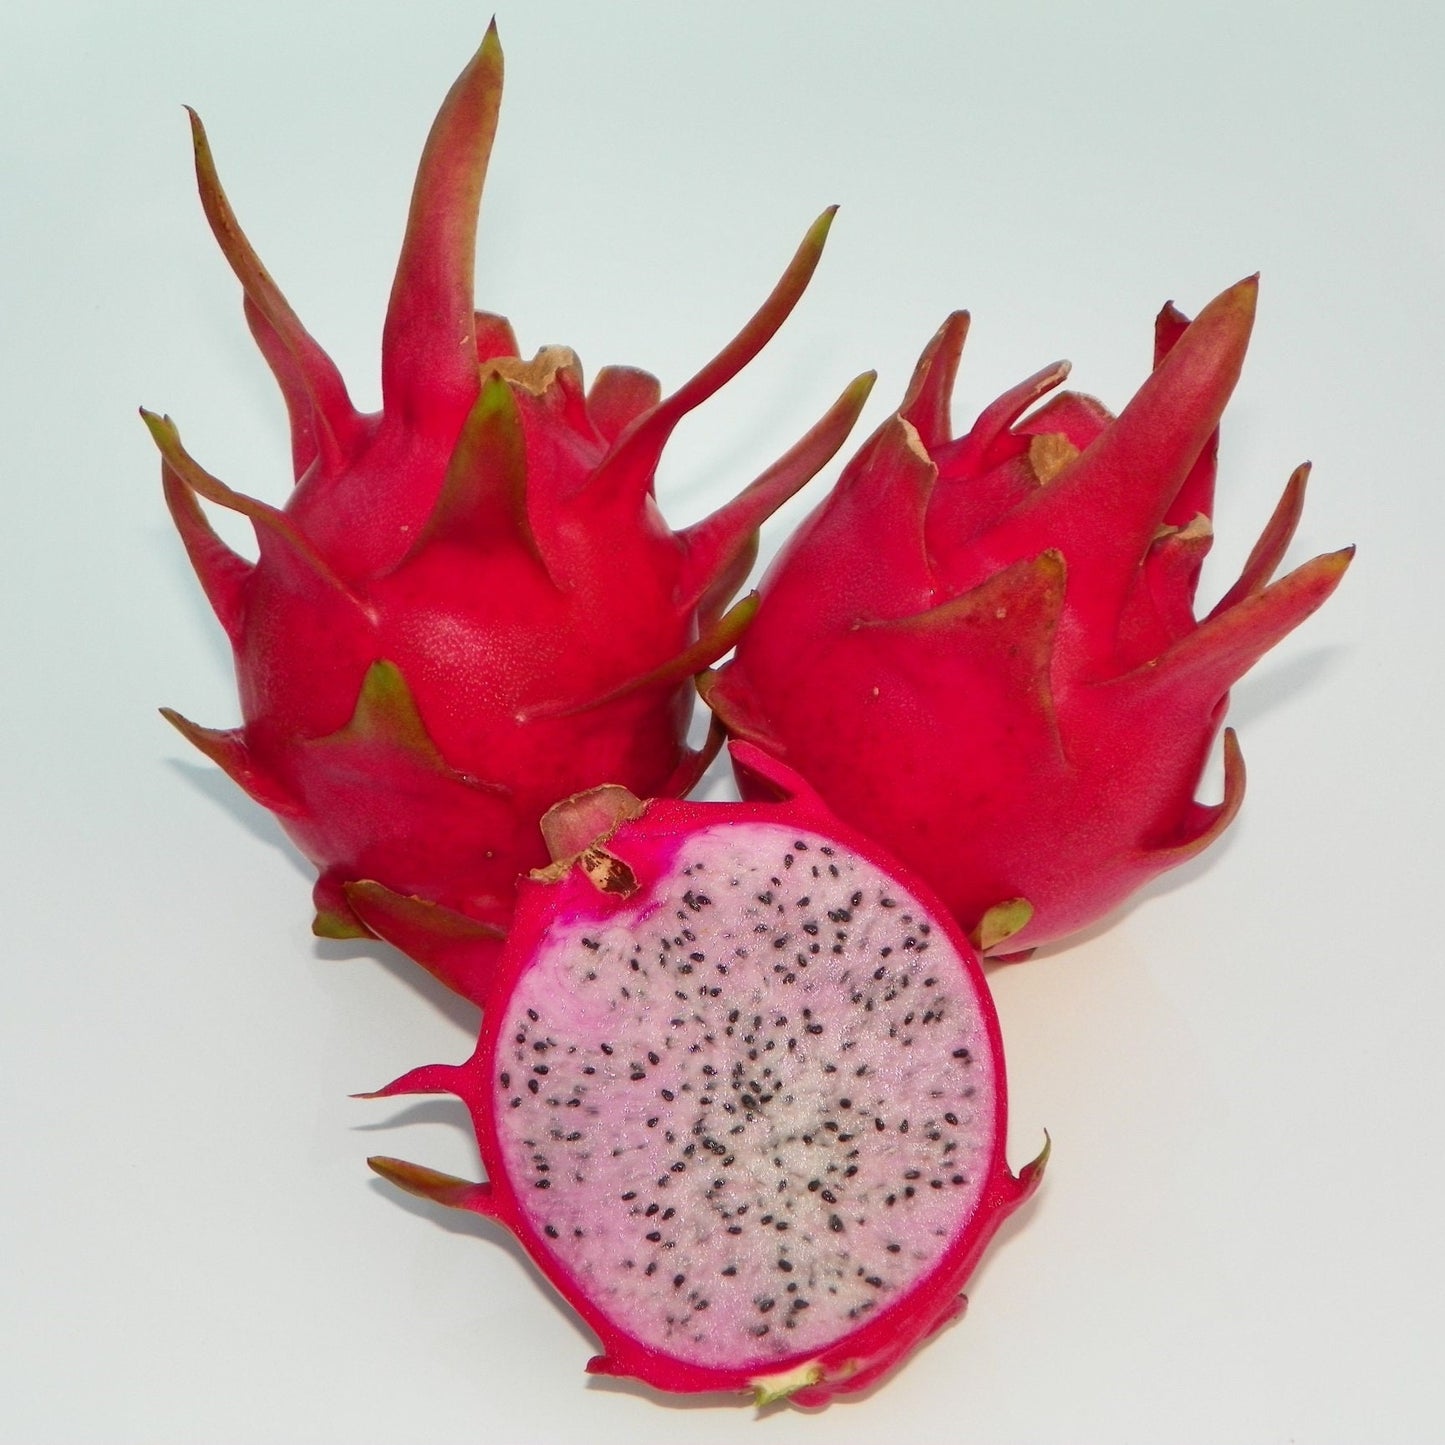 4 Delight” Hylocereus Polyrhizus X Undatus Dragon Fruit plants